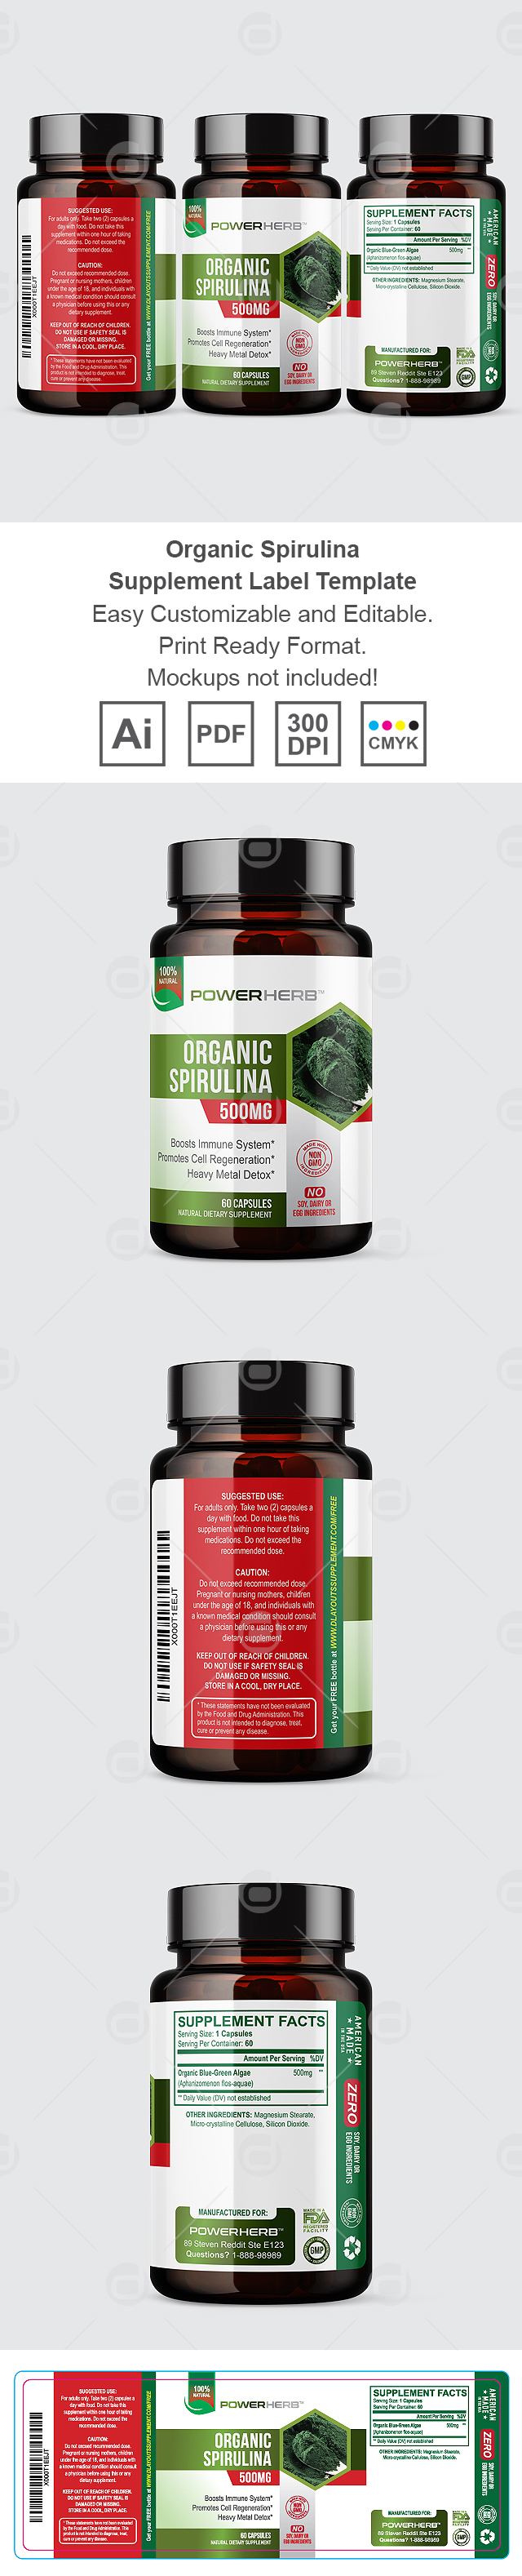 Organic Spirulina Supplement Label Template